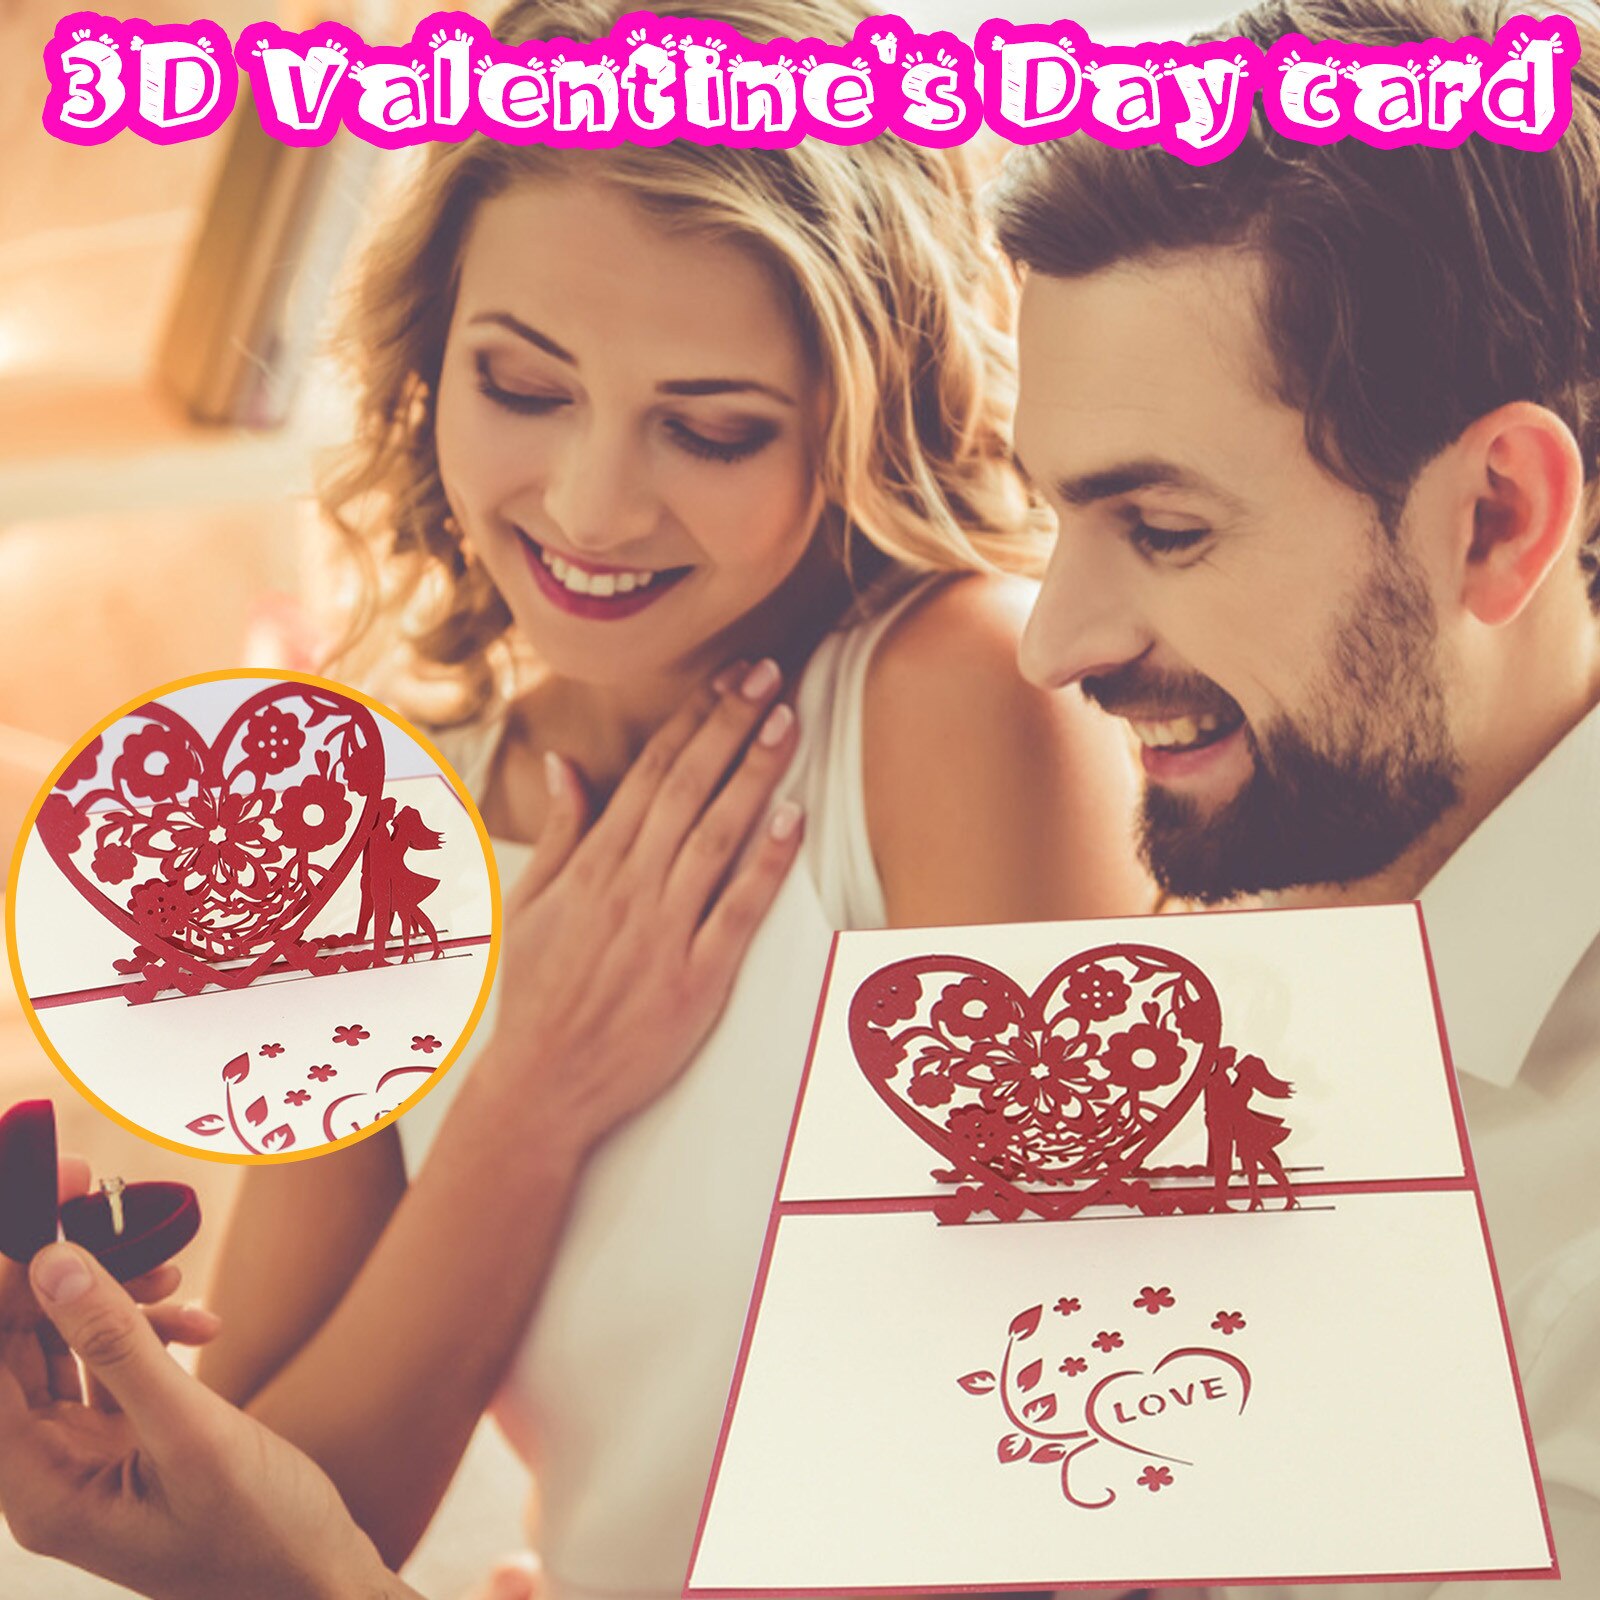 Tarjeta de felicitación 3D, tarjetas de para San Valentín, boda romántica, amor, 1 de diciembre